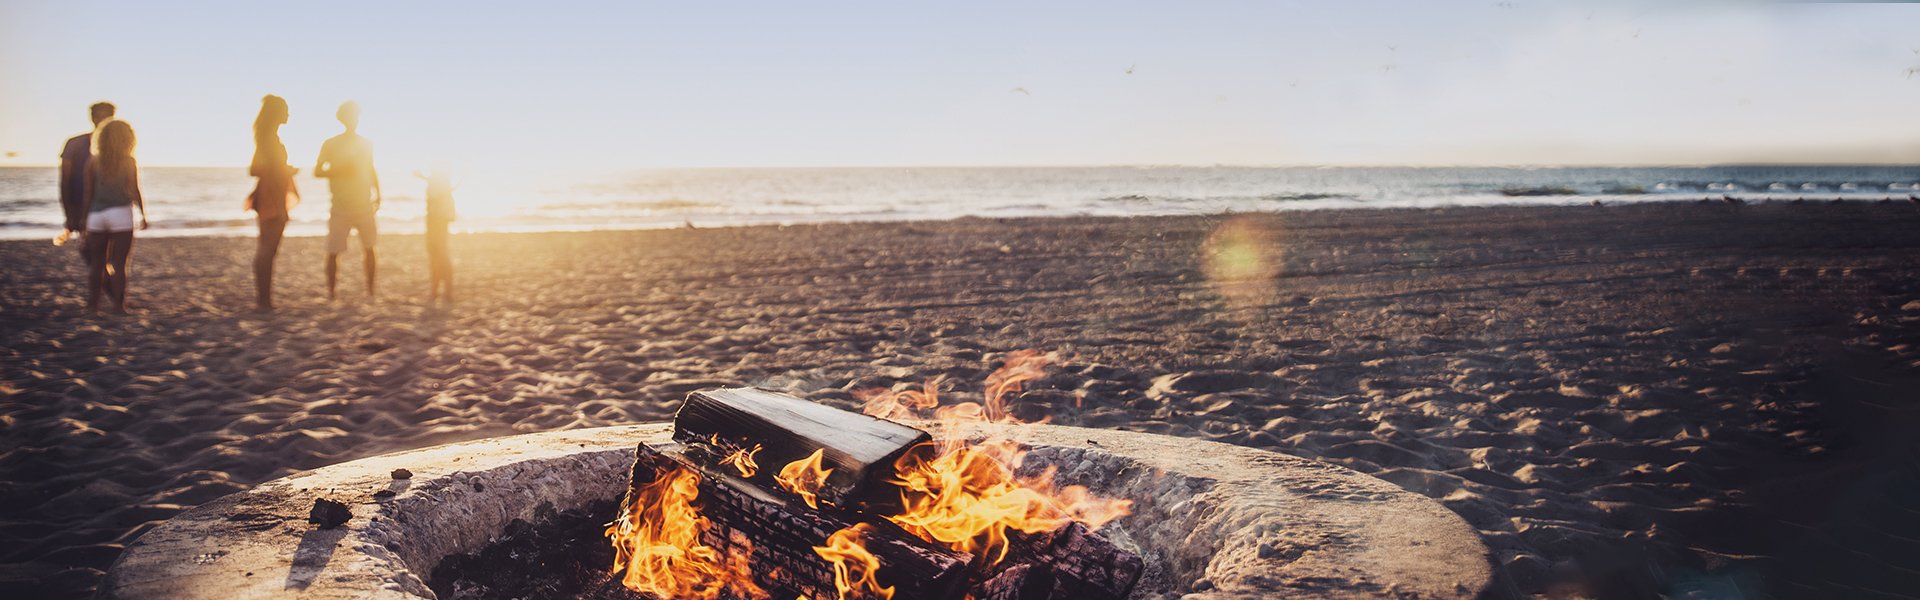 Beach bonfire